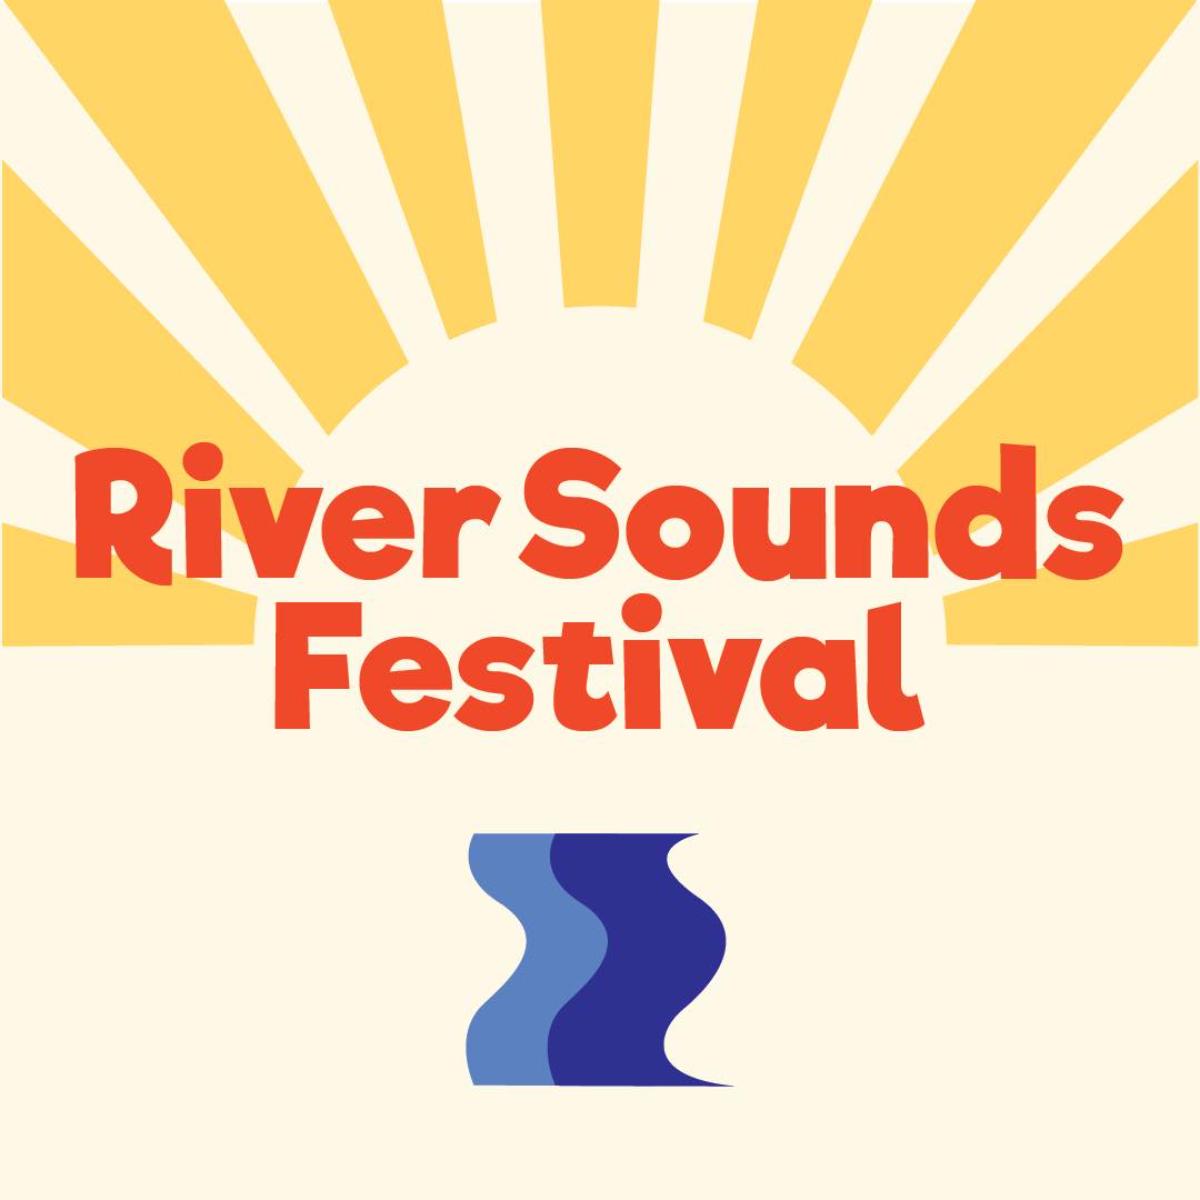 The River Sounds Festival